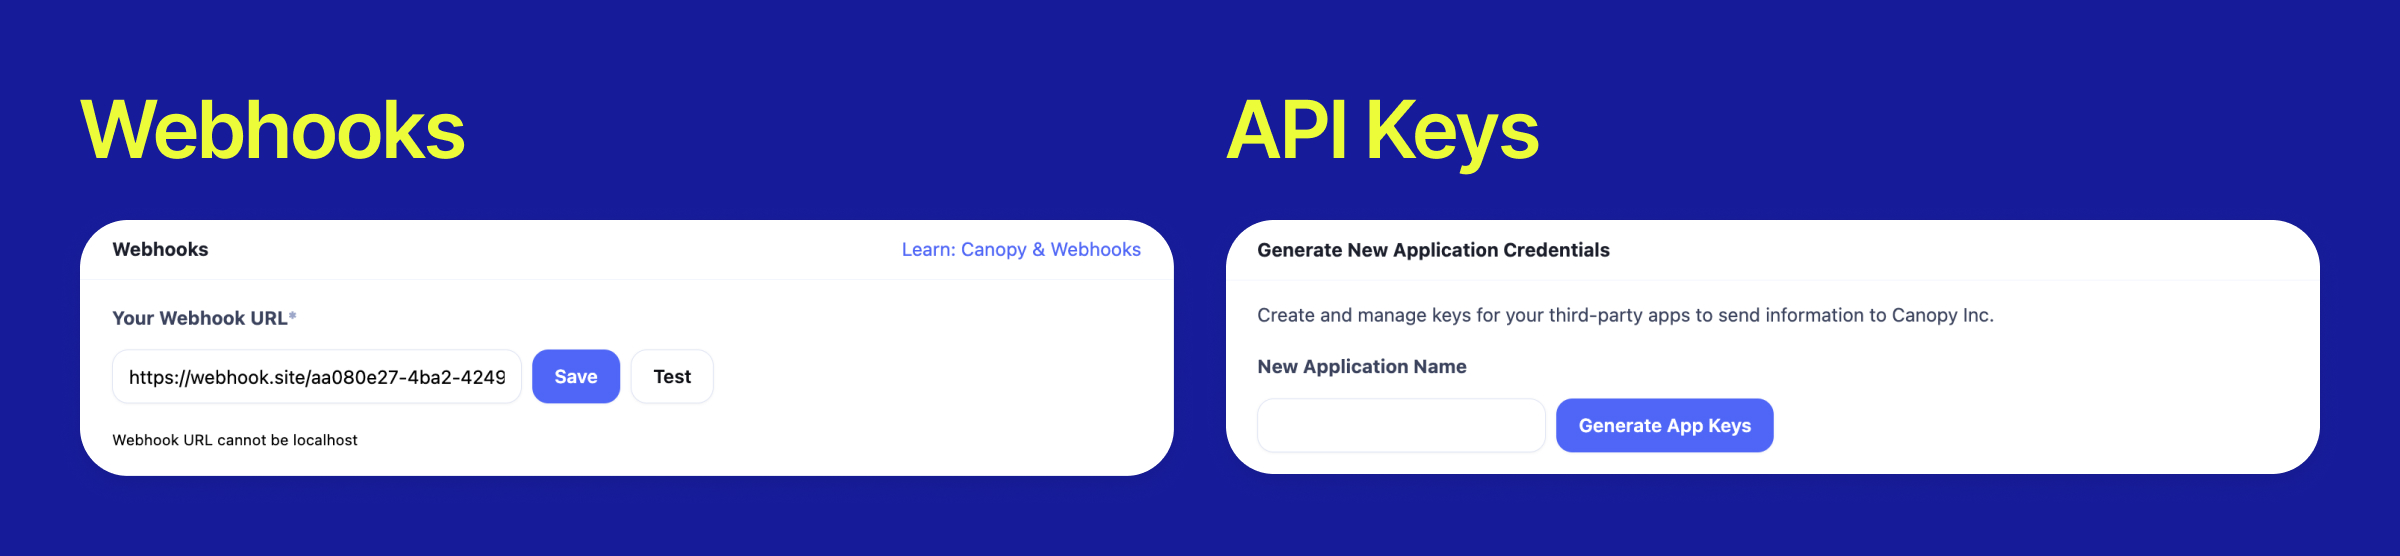 Canopyos webhooks and API keys